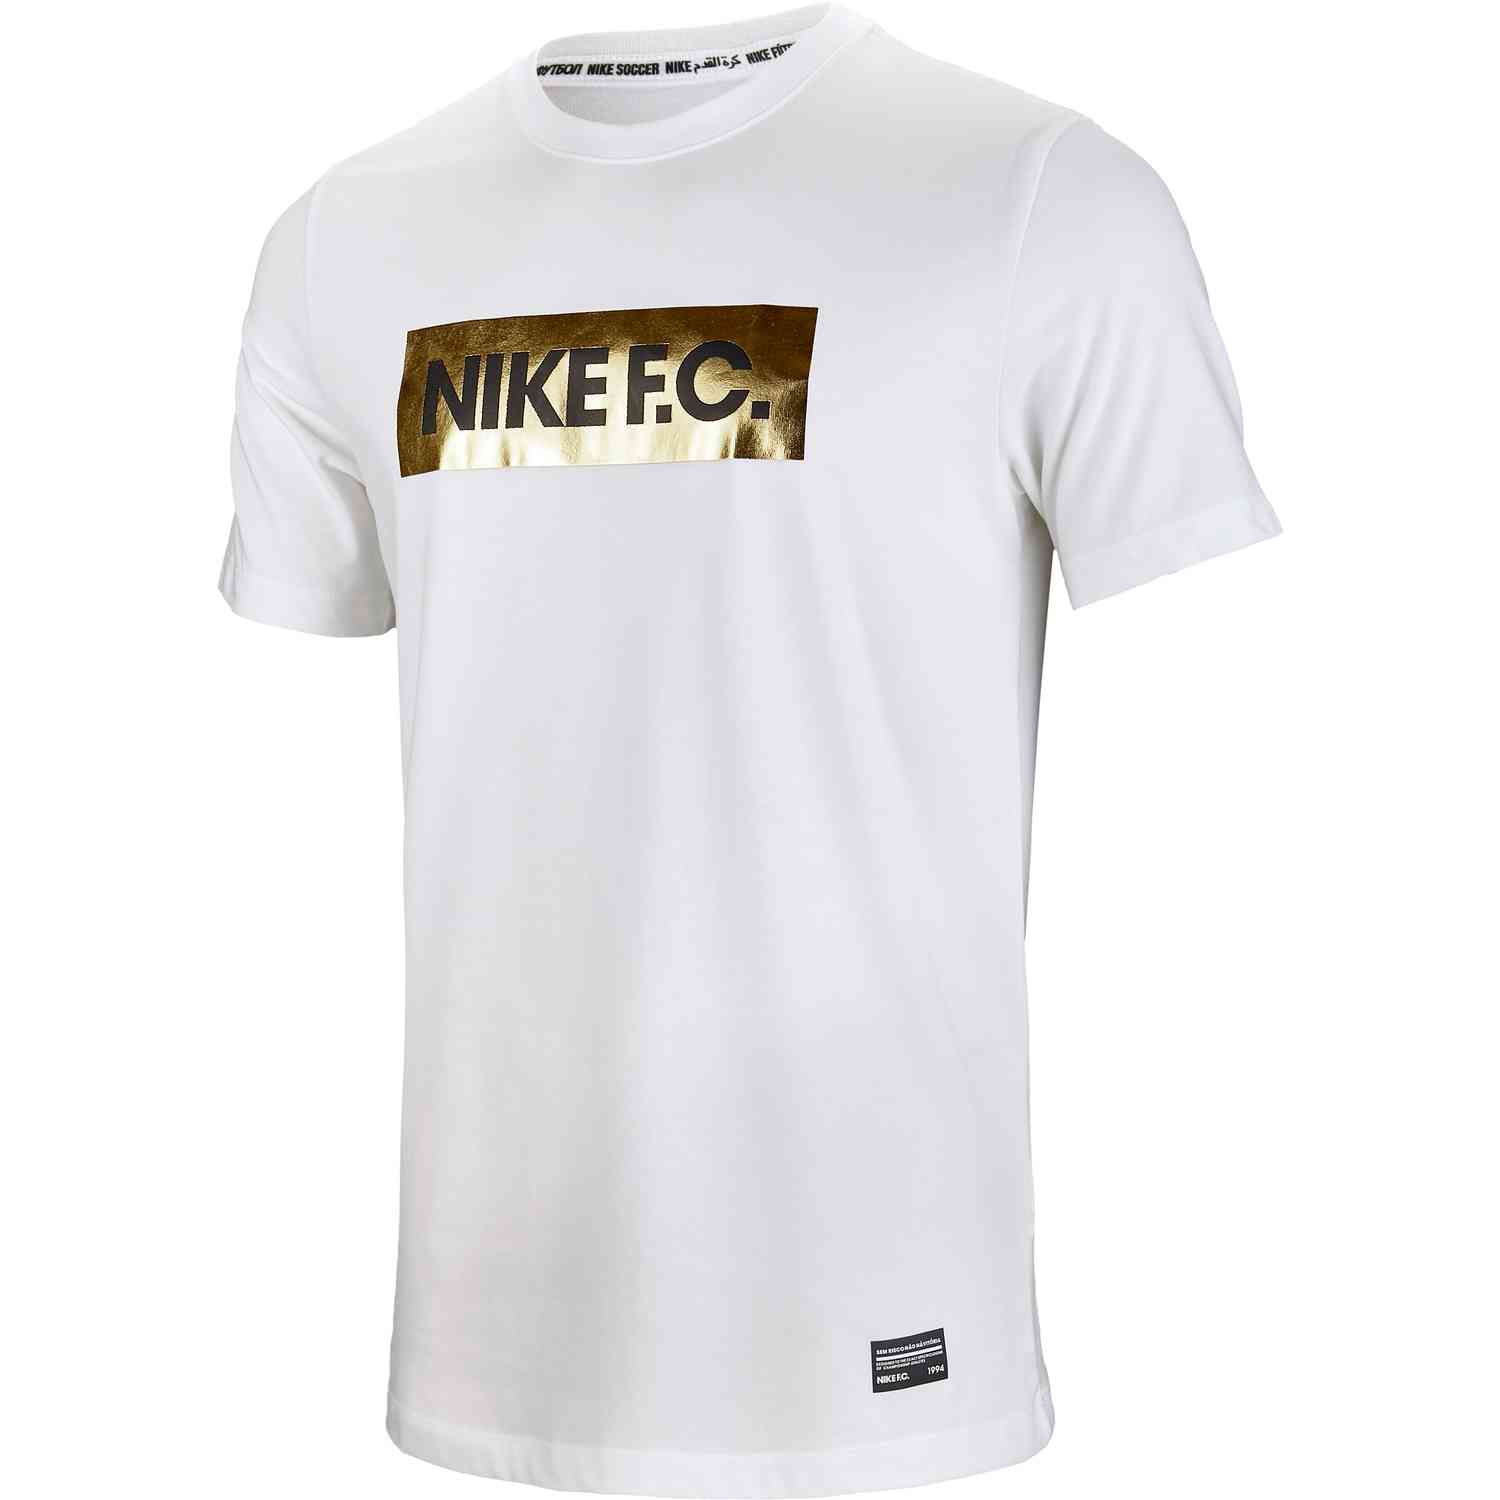 Nike FC Gold Tee - White -